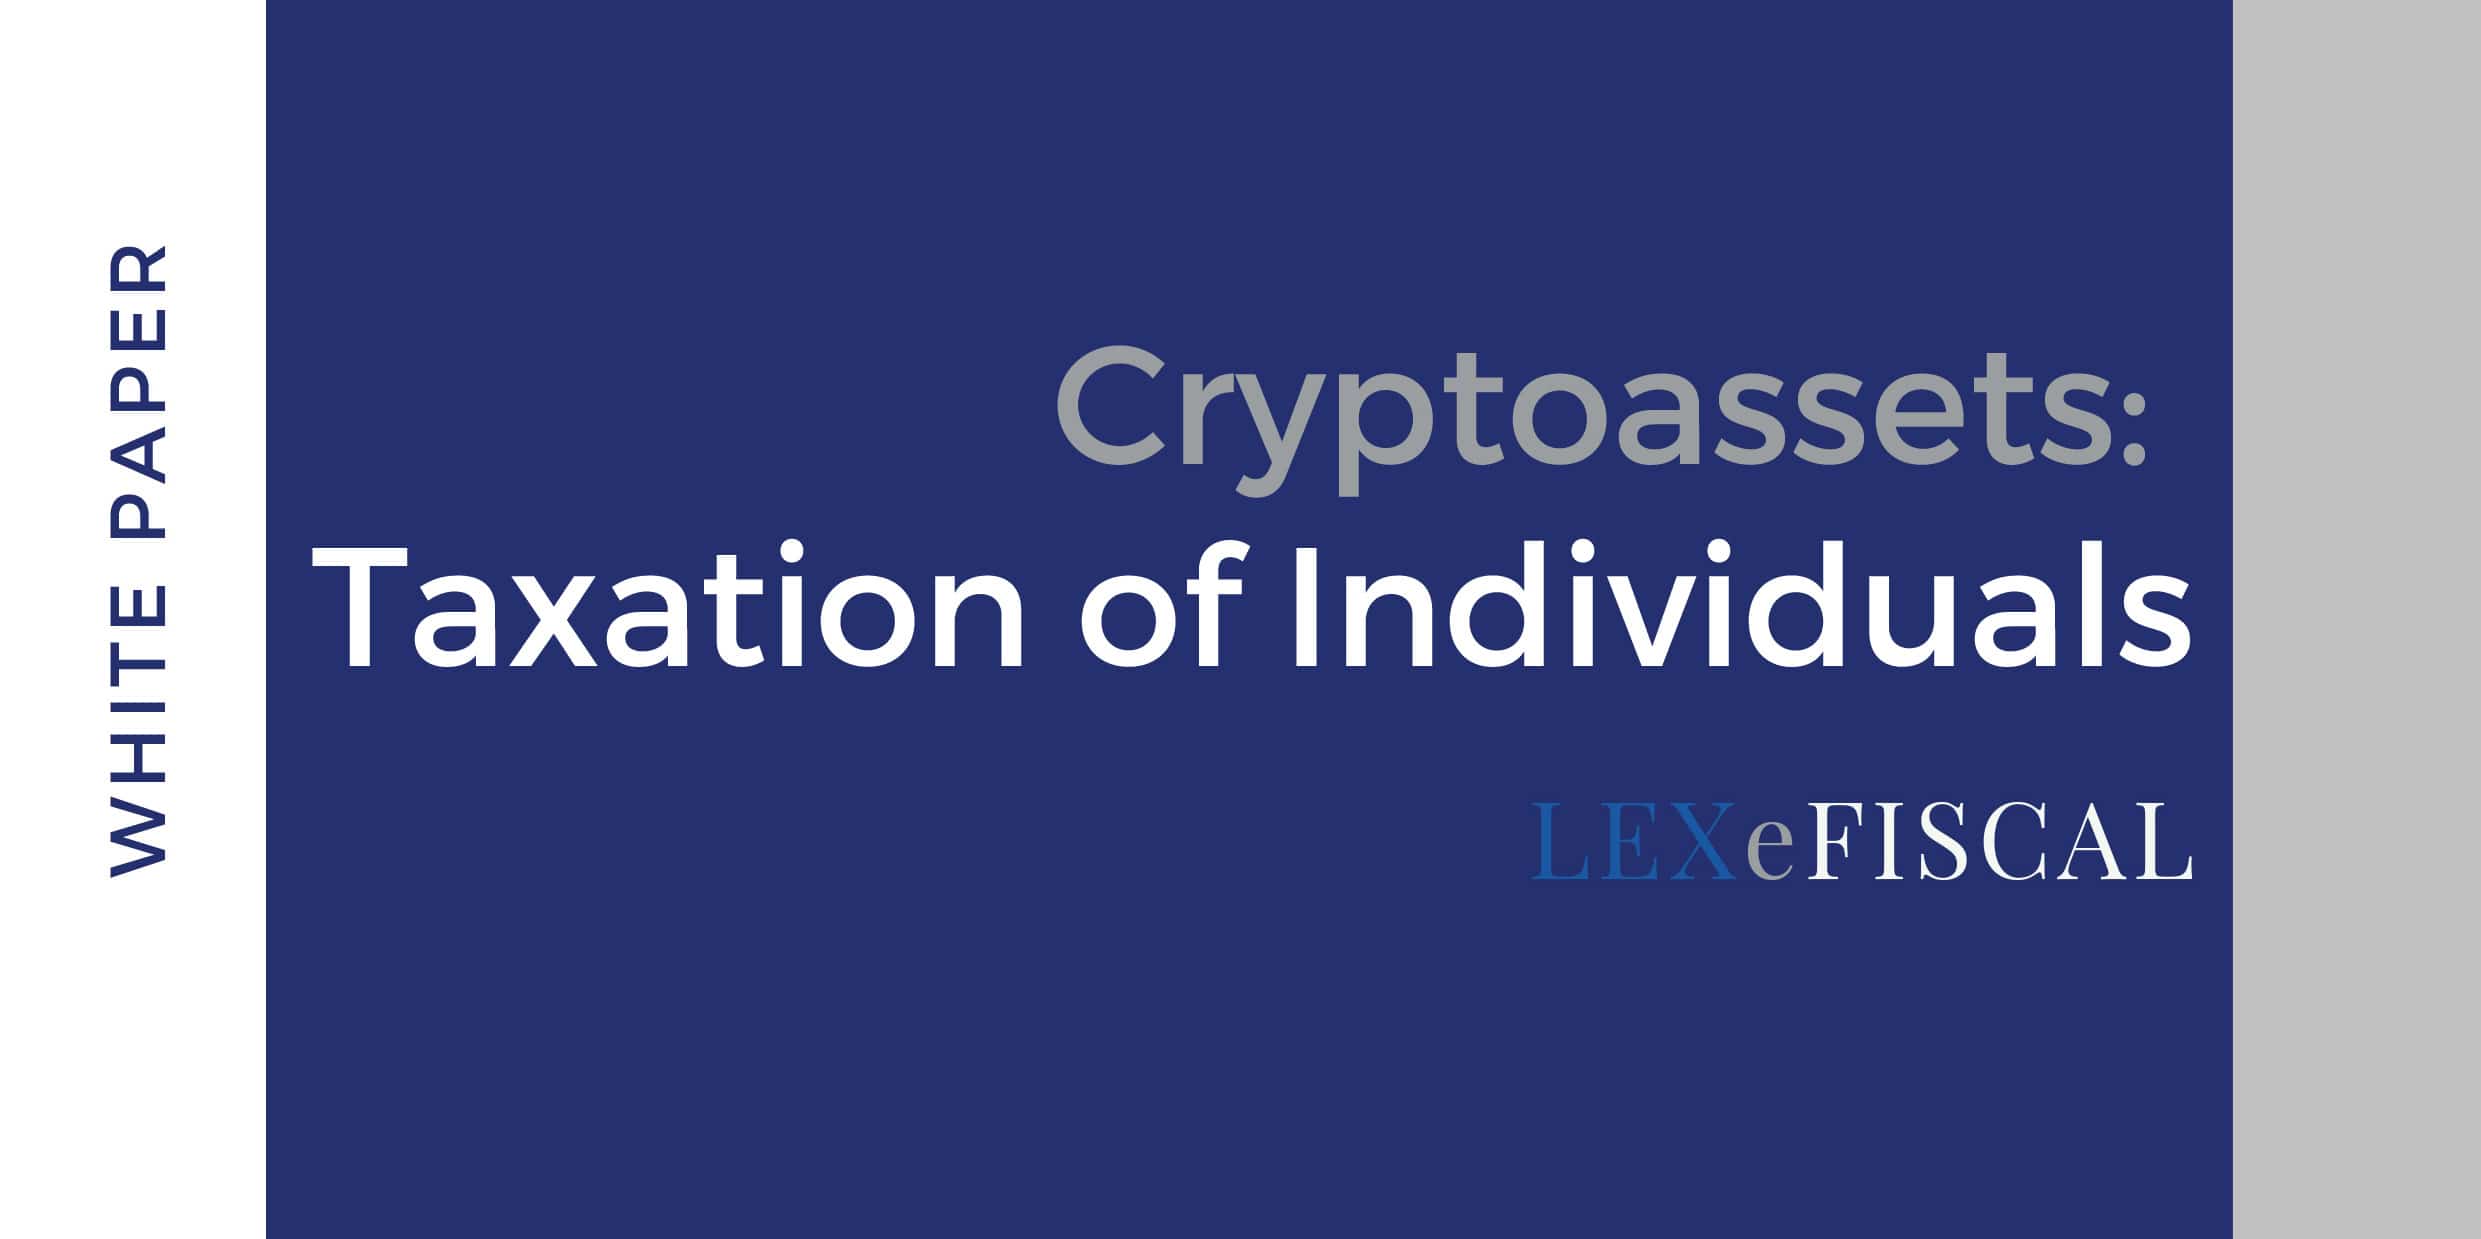 Cryptoassets: Taxation of Individuals